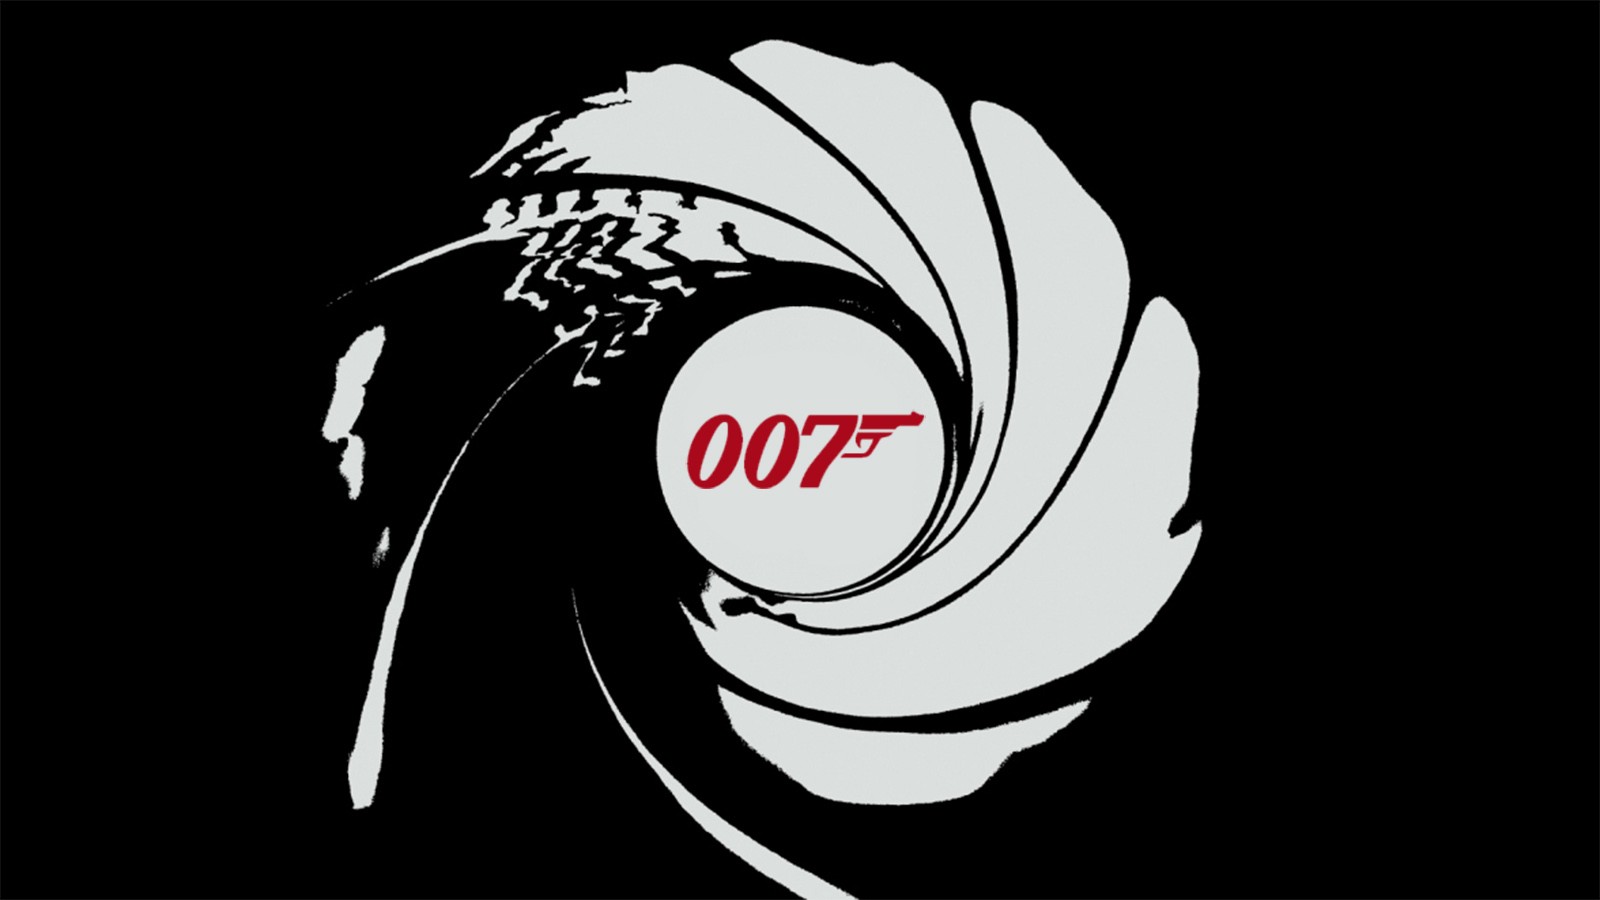 General 1600x900 James Bond movies numbers 007 logo